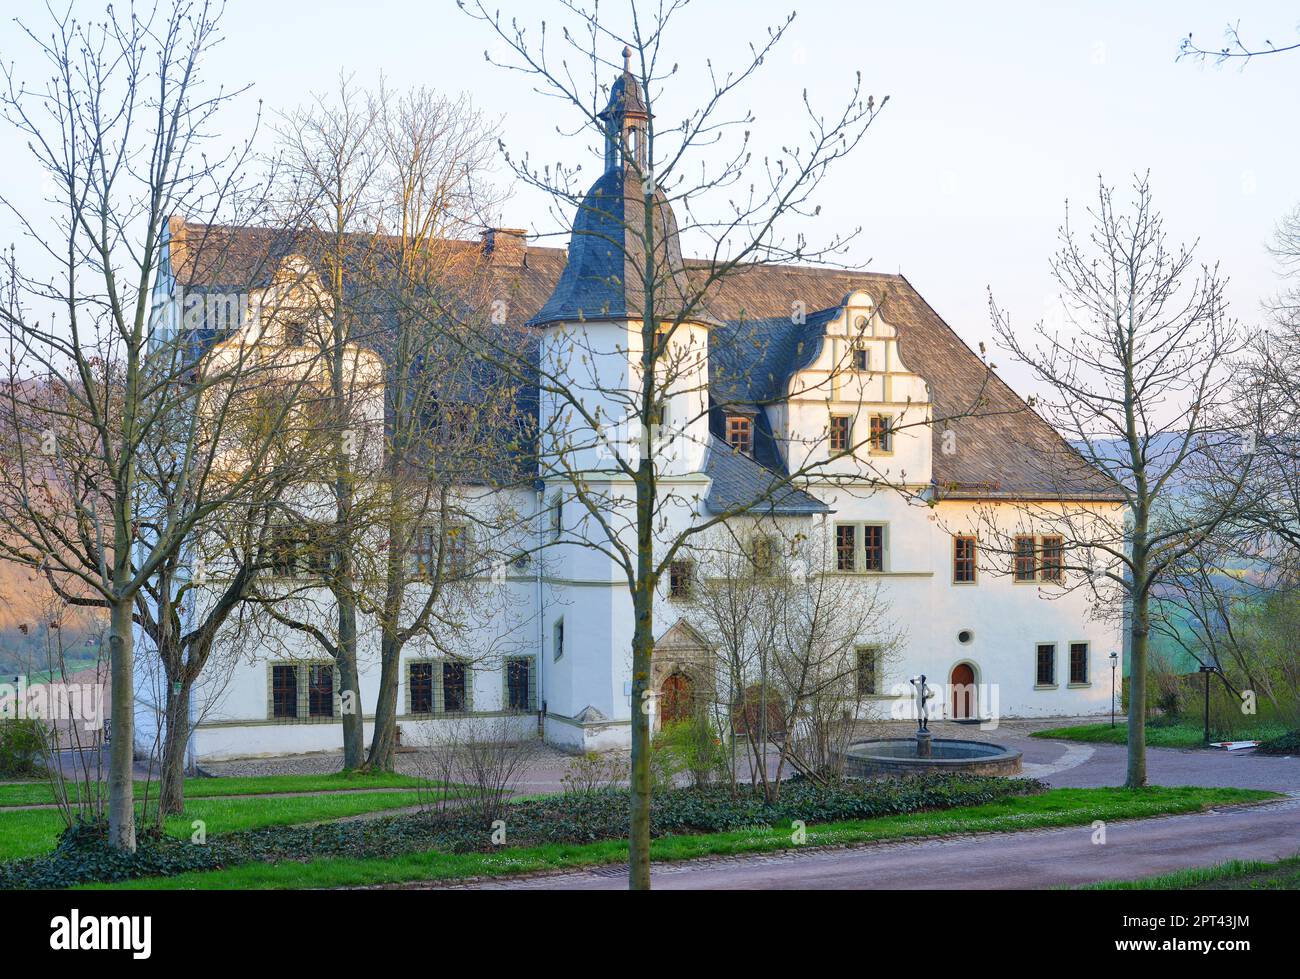 Dornburg castle, Germany, park view, classic architecture Stock Photo